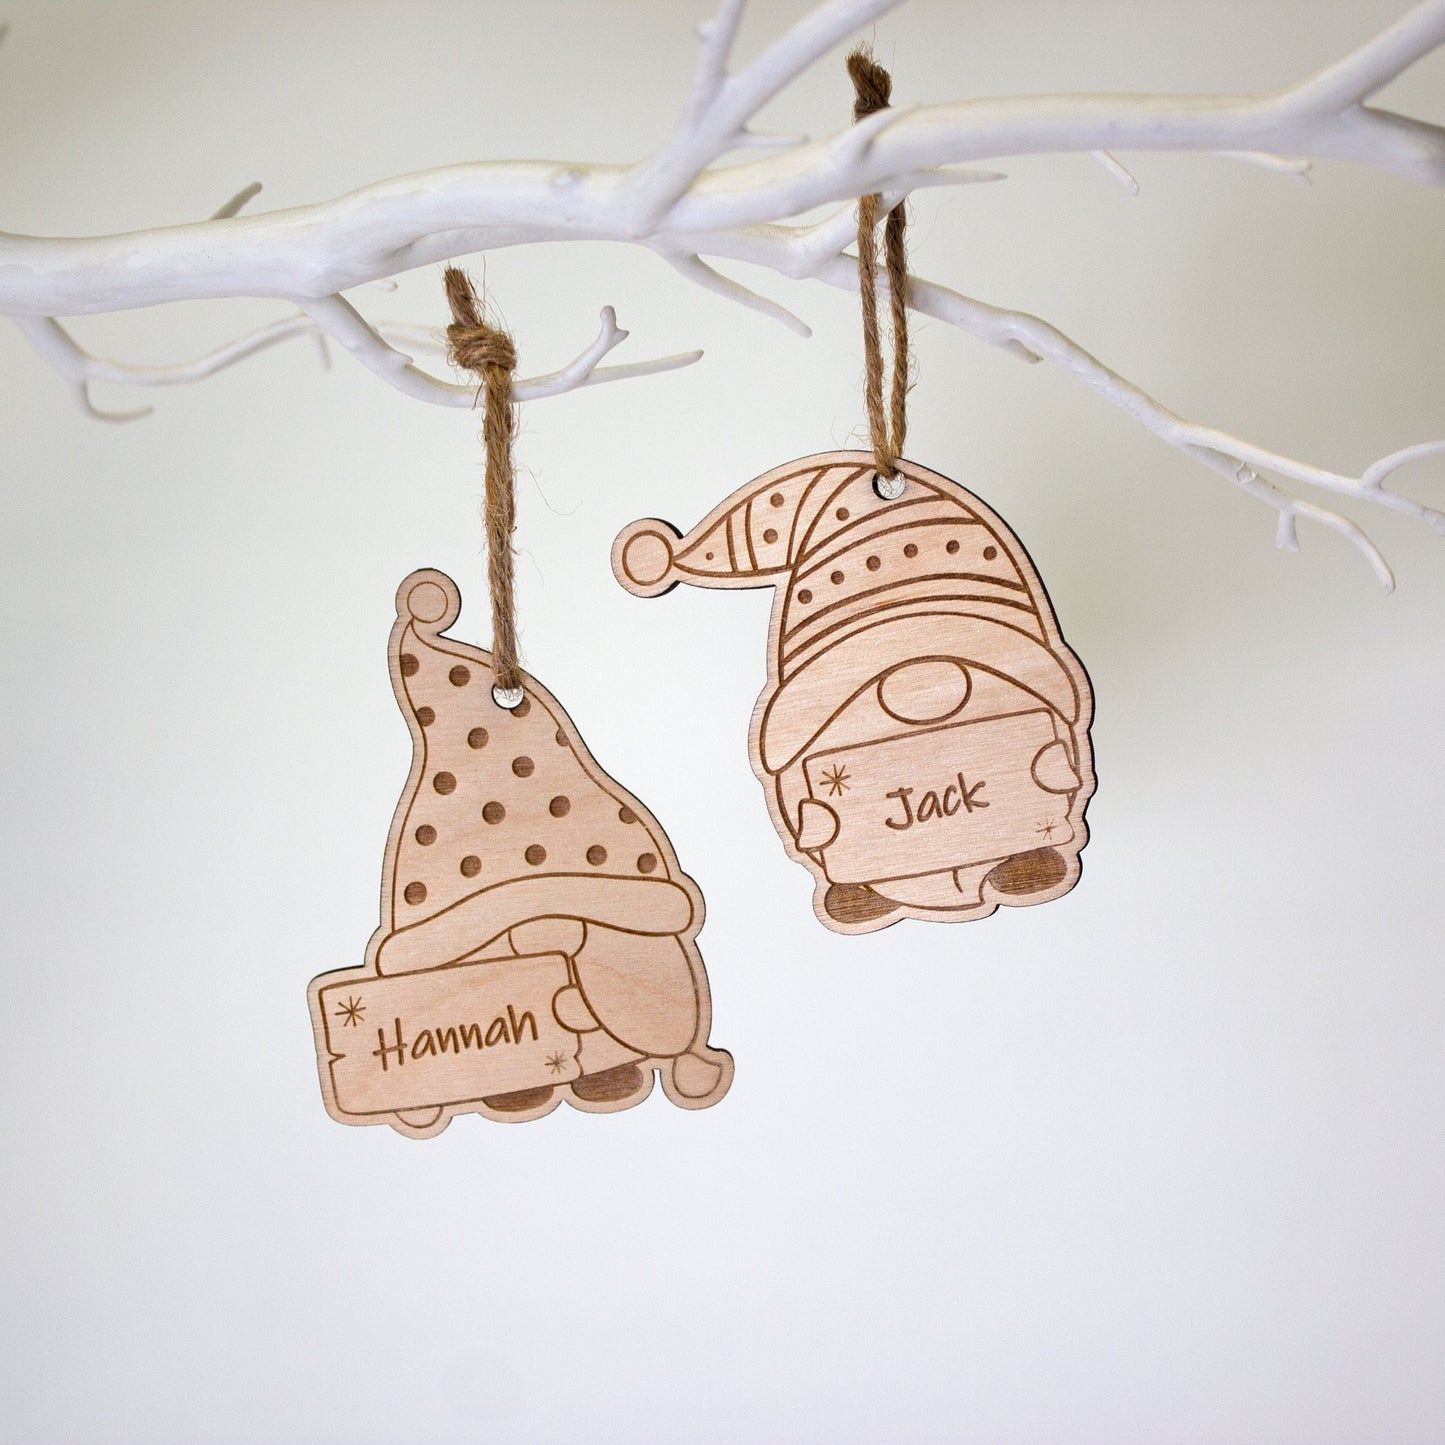 Personalised Gonk Tree Decoration, Custom Gnome Tree Ornament, Christmas Gonk